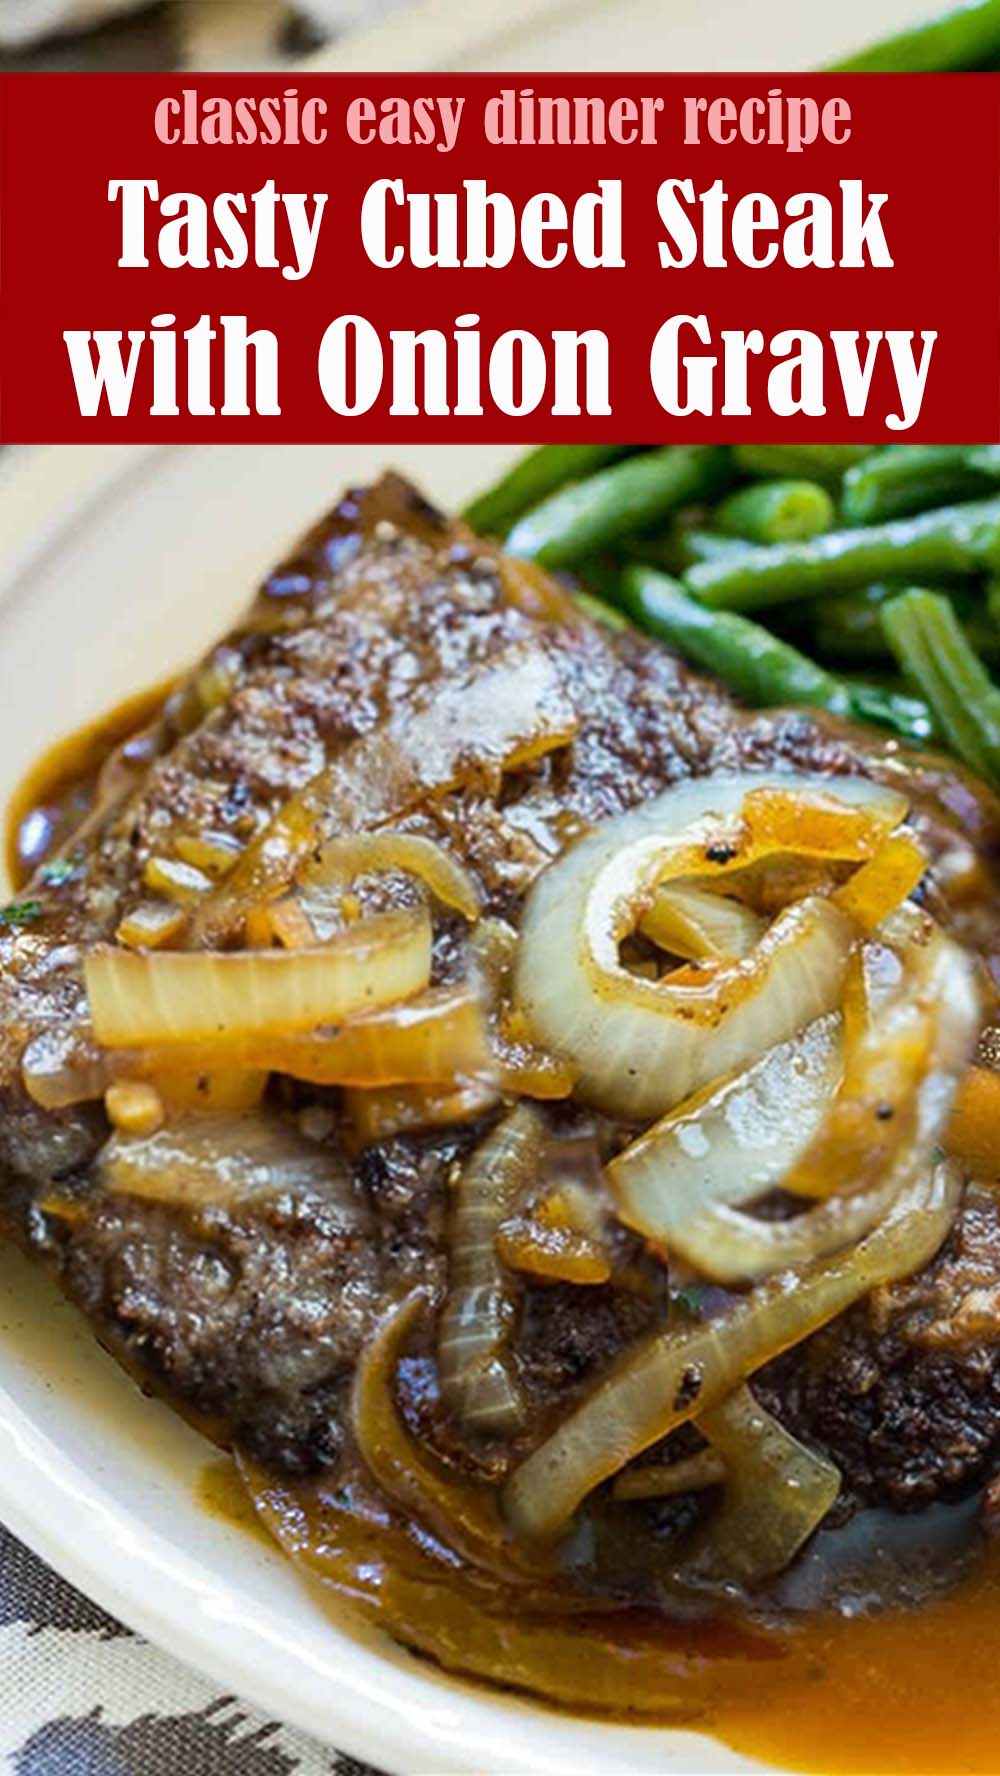 Tasty Cubed Steak with Onion Gravy